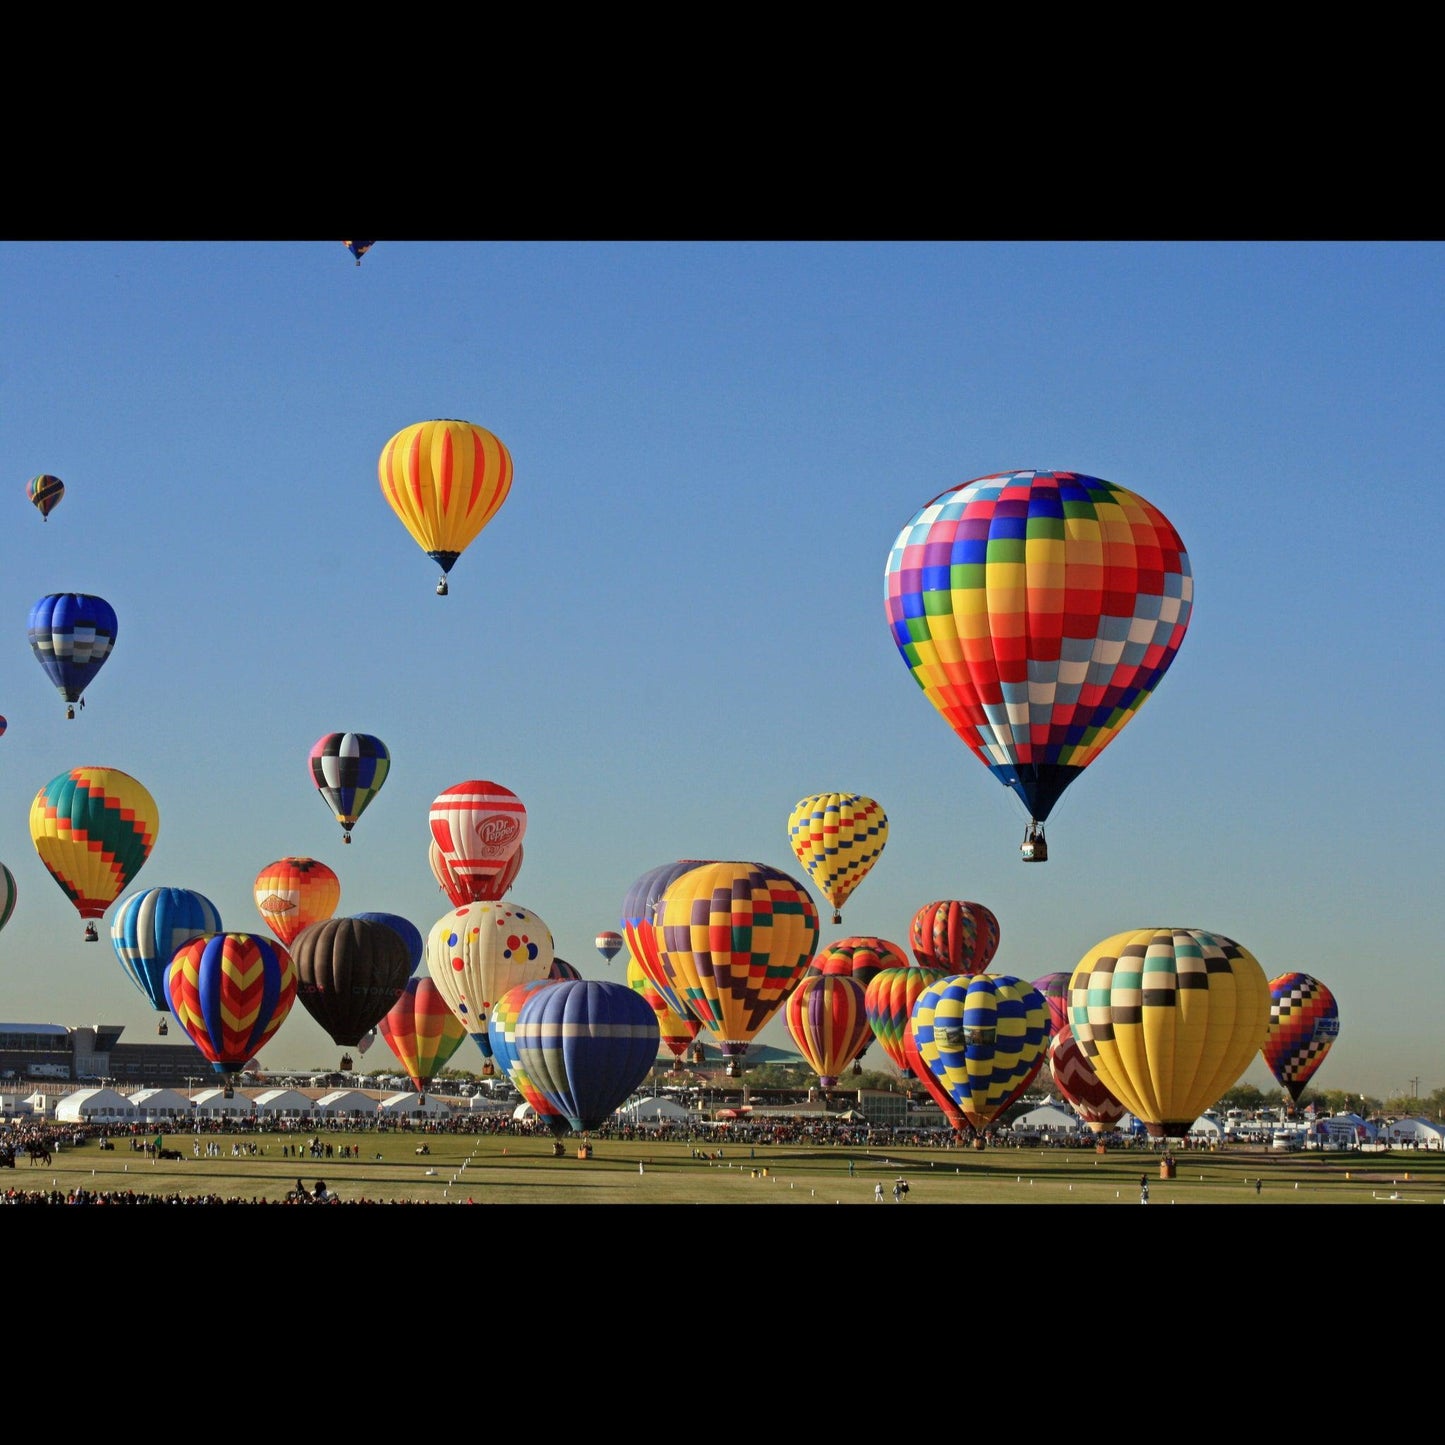 flying-competition-balloon-fiesta-v-isenhower-photography - V. Isenhower Photography